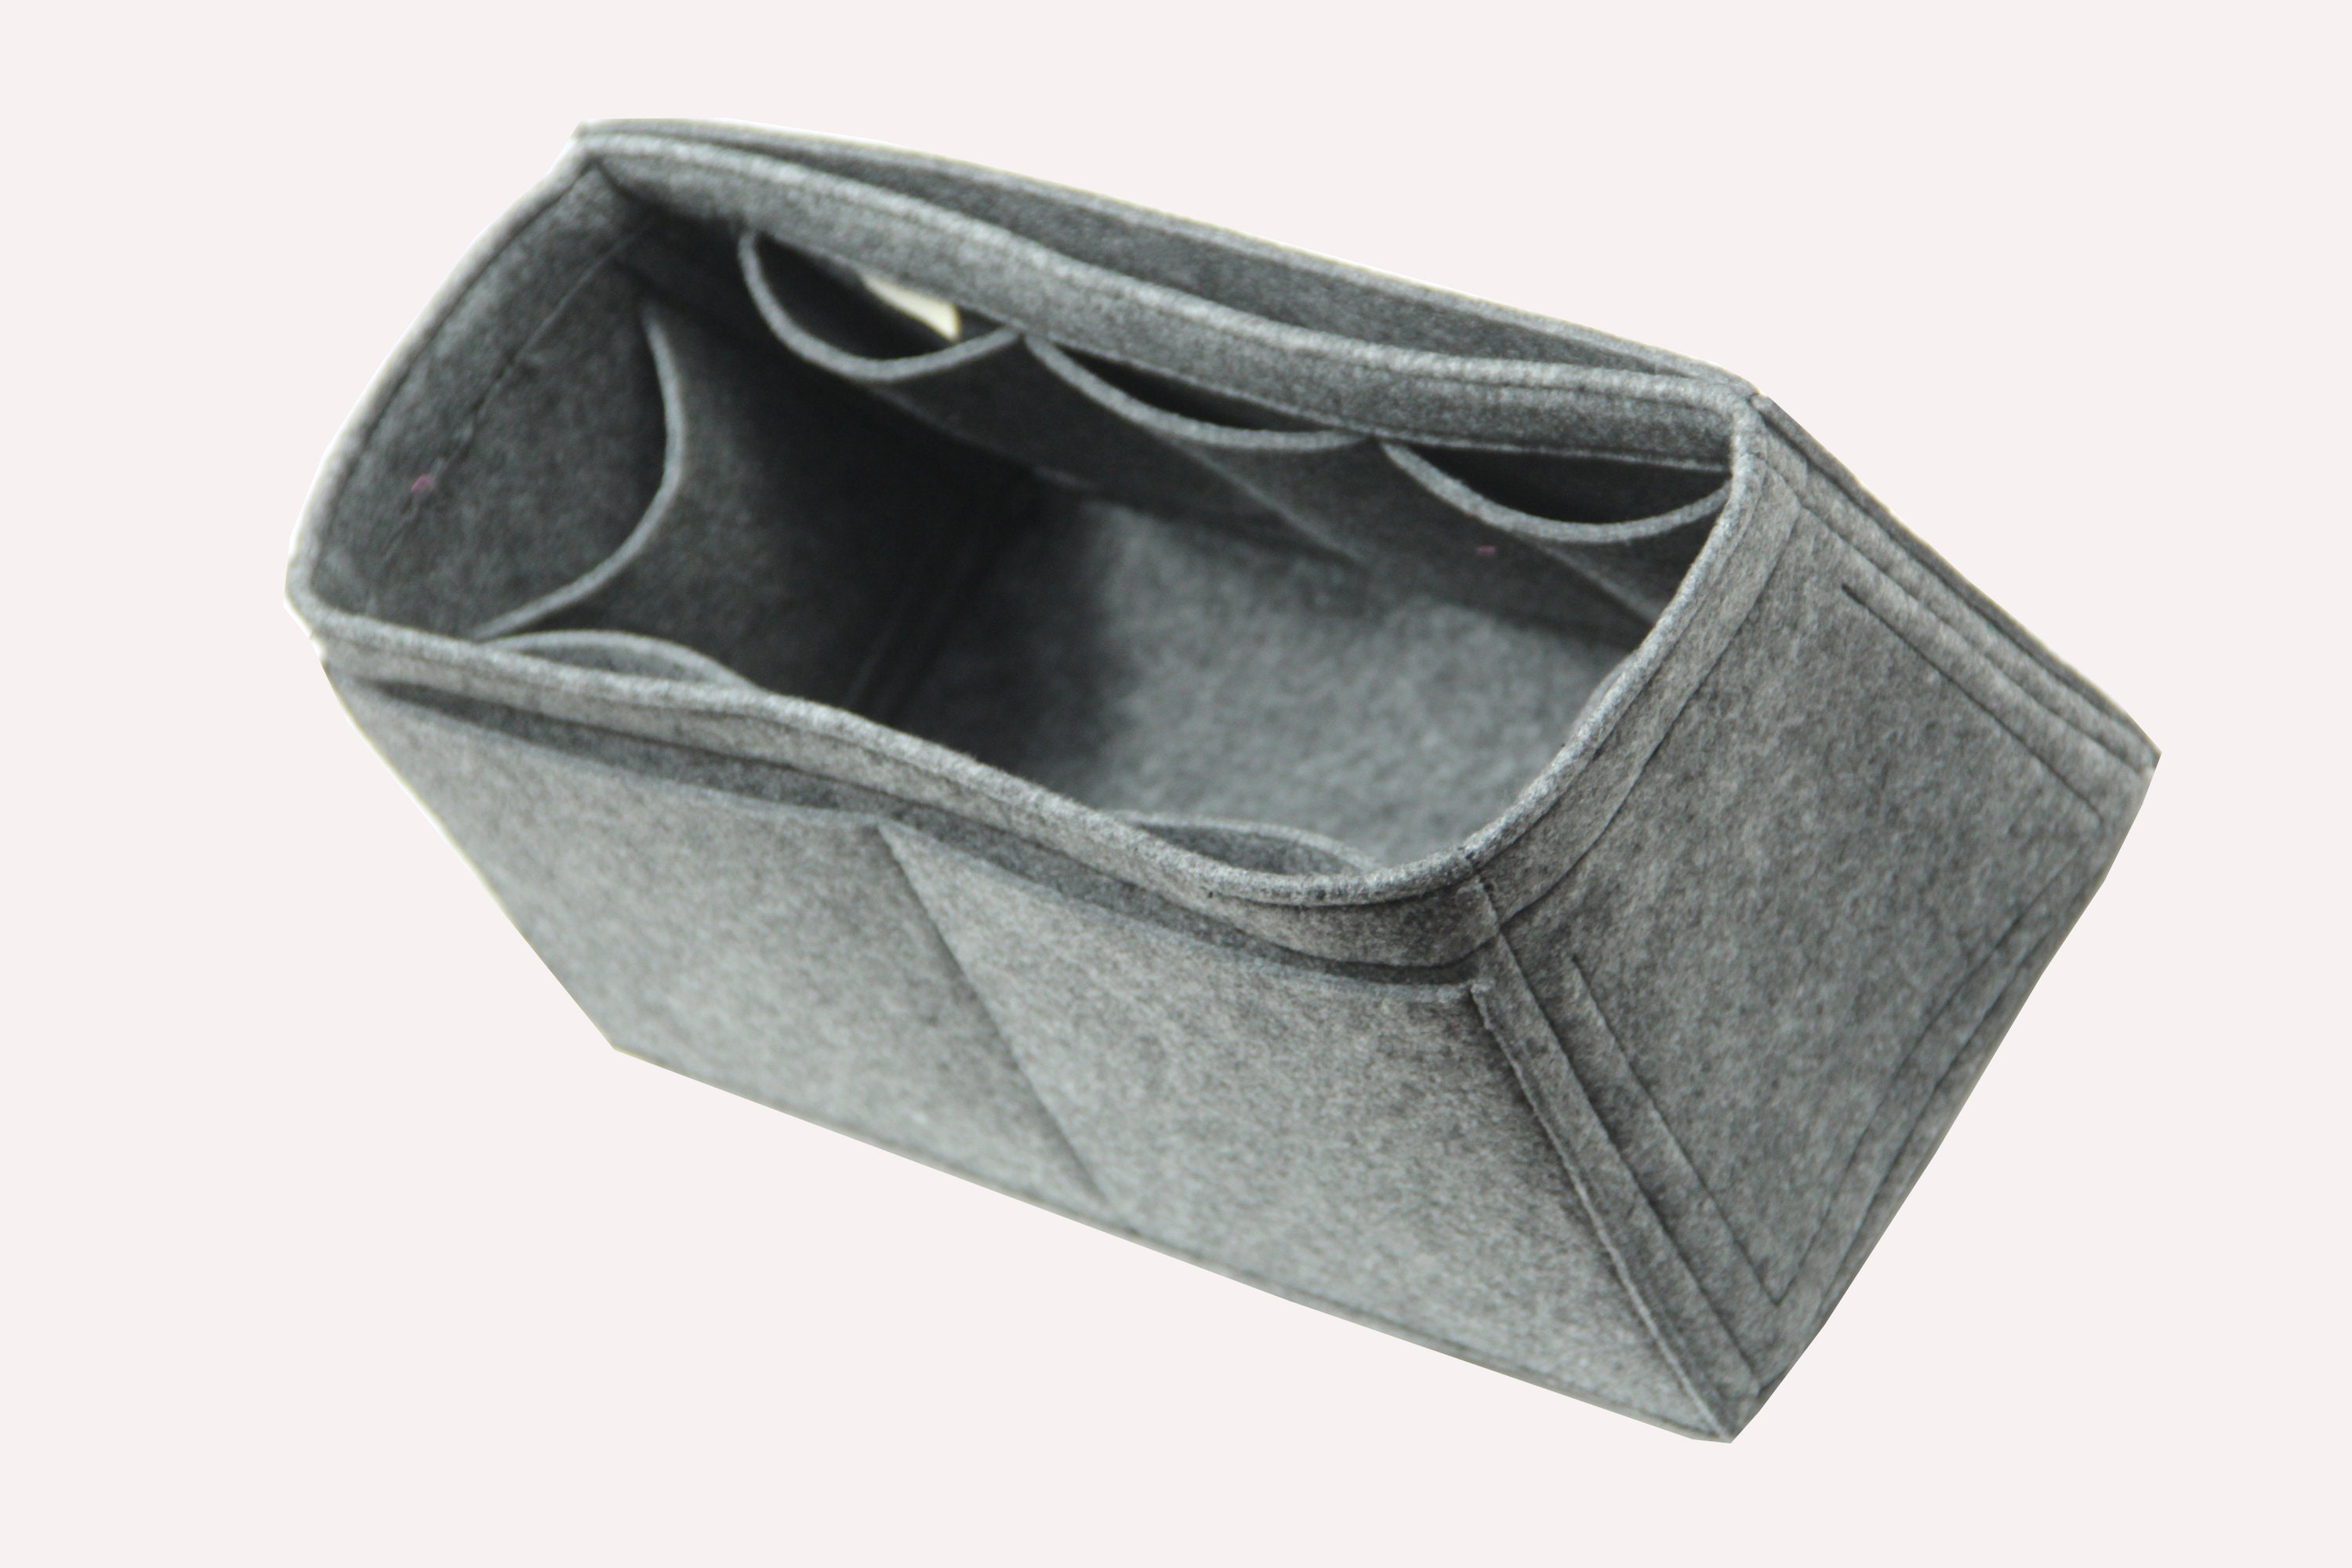  Zoomoni Premium Bag Organizer for Hermes Kelly 35 Retourne  (Handmade/20 Color Options) [Purse Organiser, Liner, Insert, Shaper] :  Handmade Products